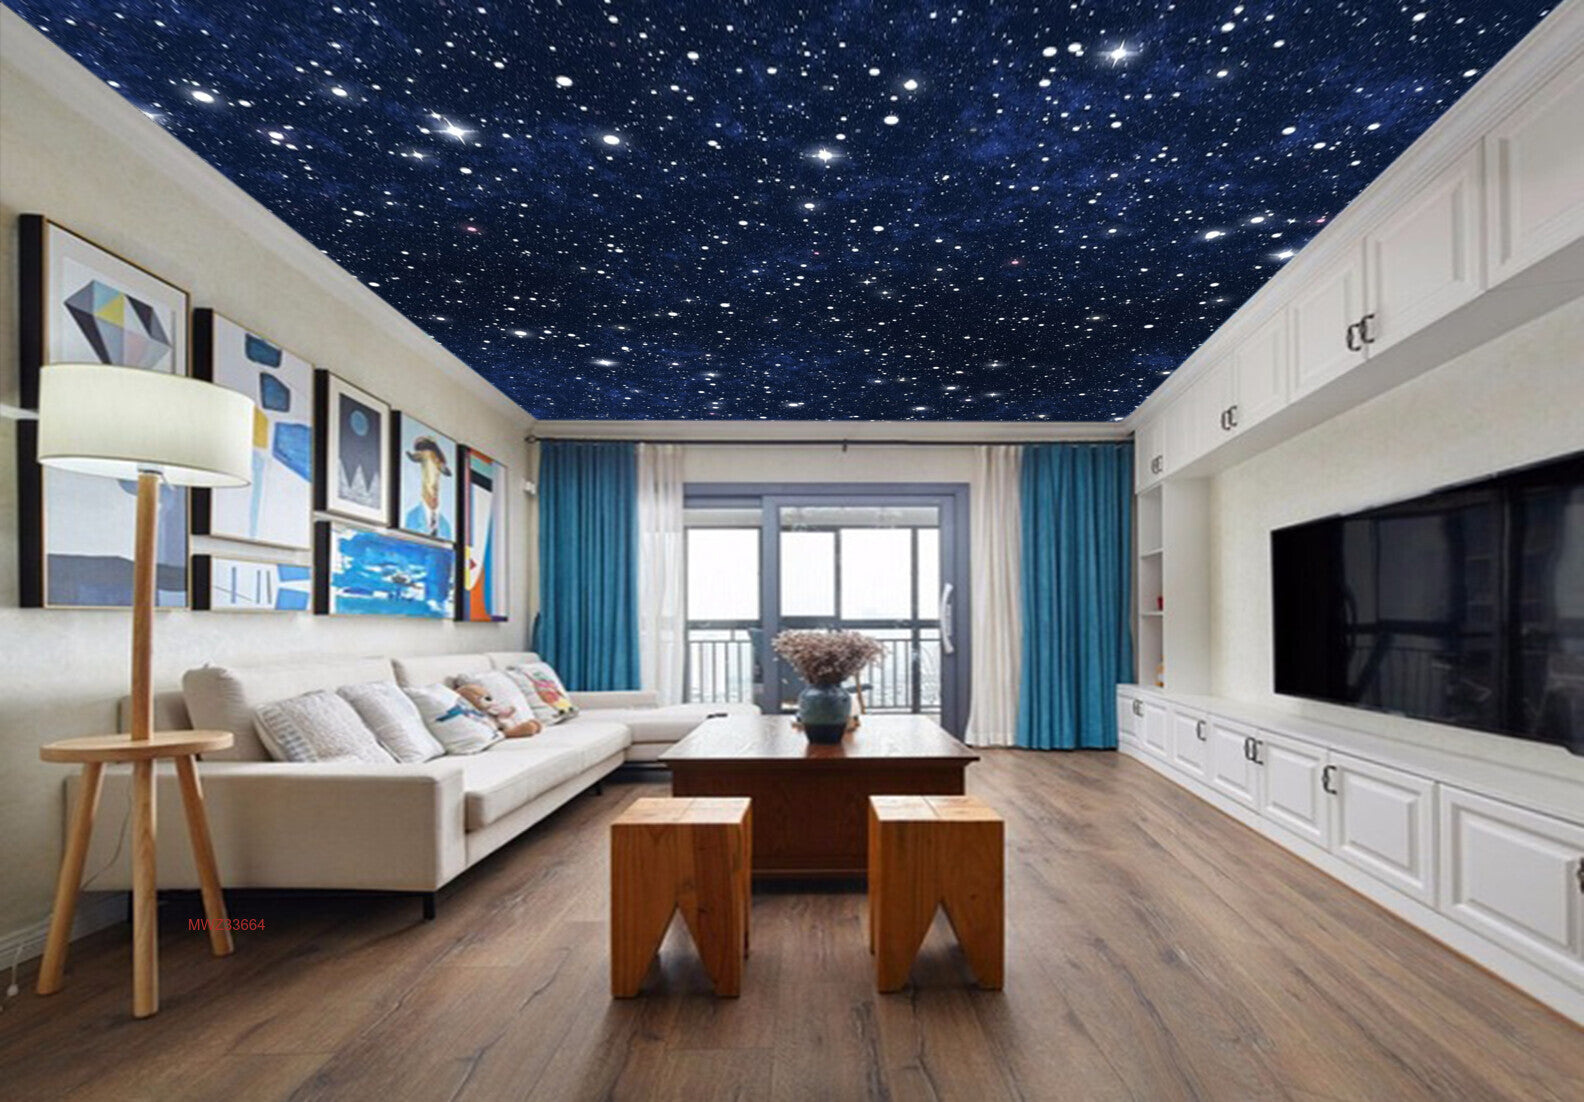 Avikalp MWZ3366 Blue Black Space Stars HD Wallpaper for Ceiling